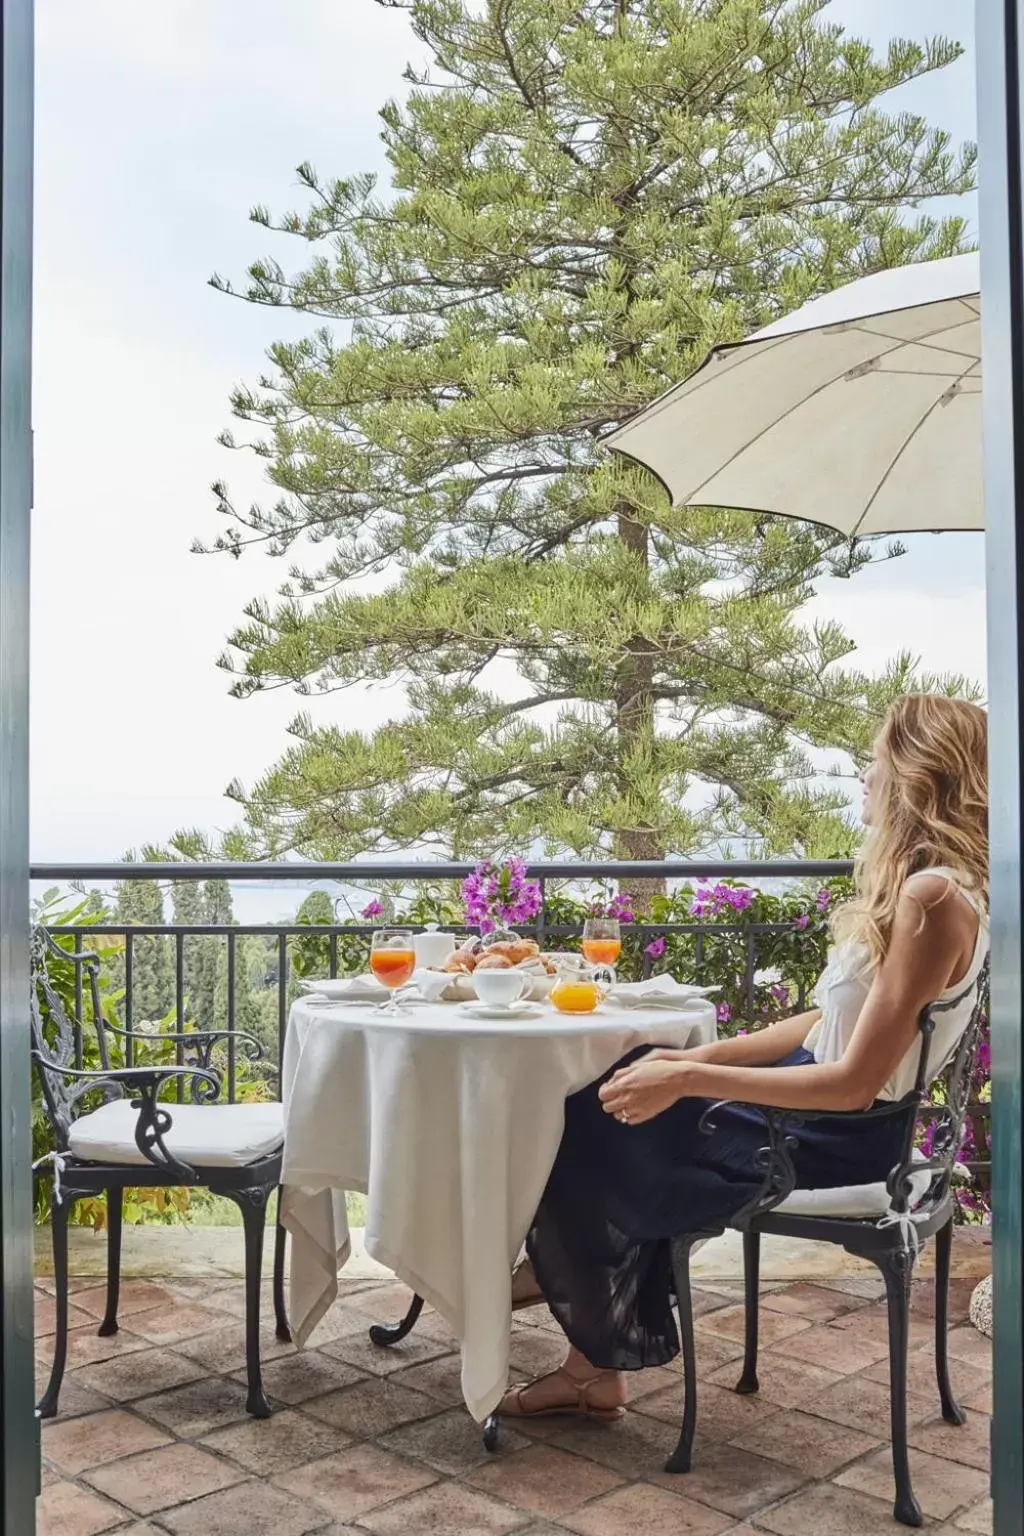 Balcony/Terrace in Grand Hotel Timeo, A Belmond Hotel, Taormina